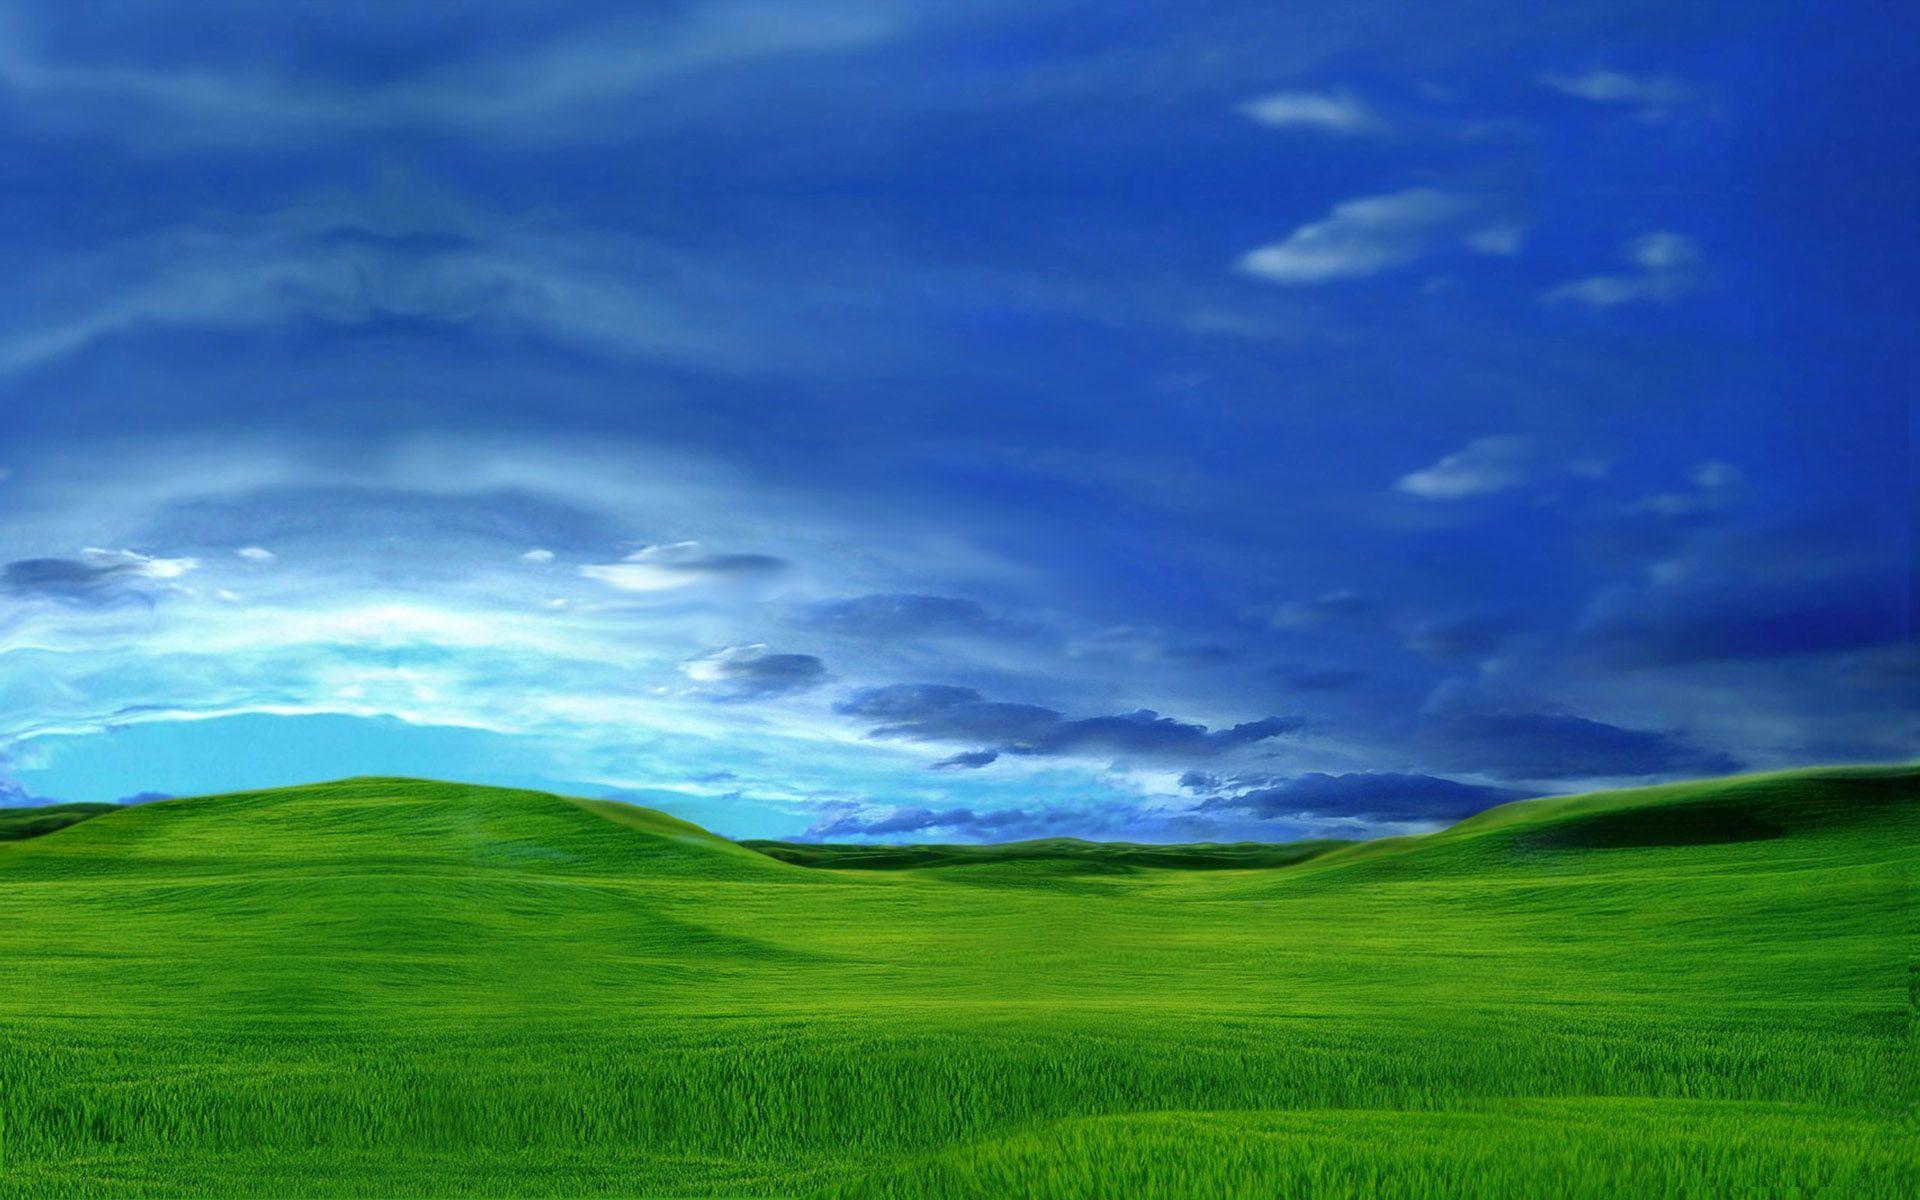 Windows Xp Wallpaper, Adorable HDQ Background of Windows Xp, 39